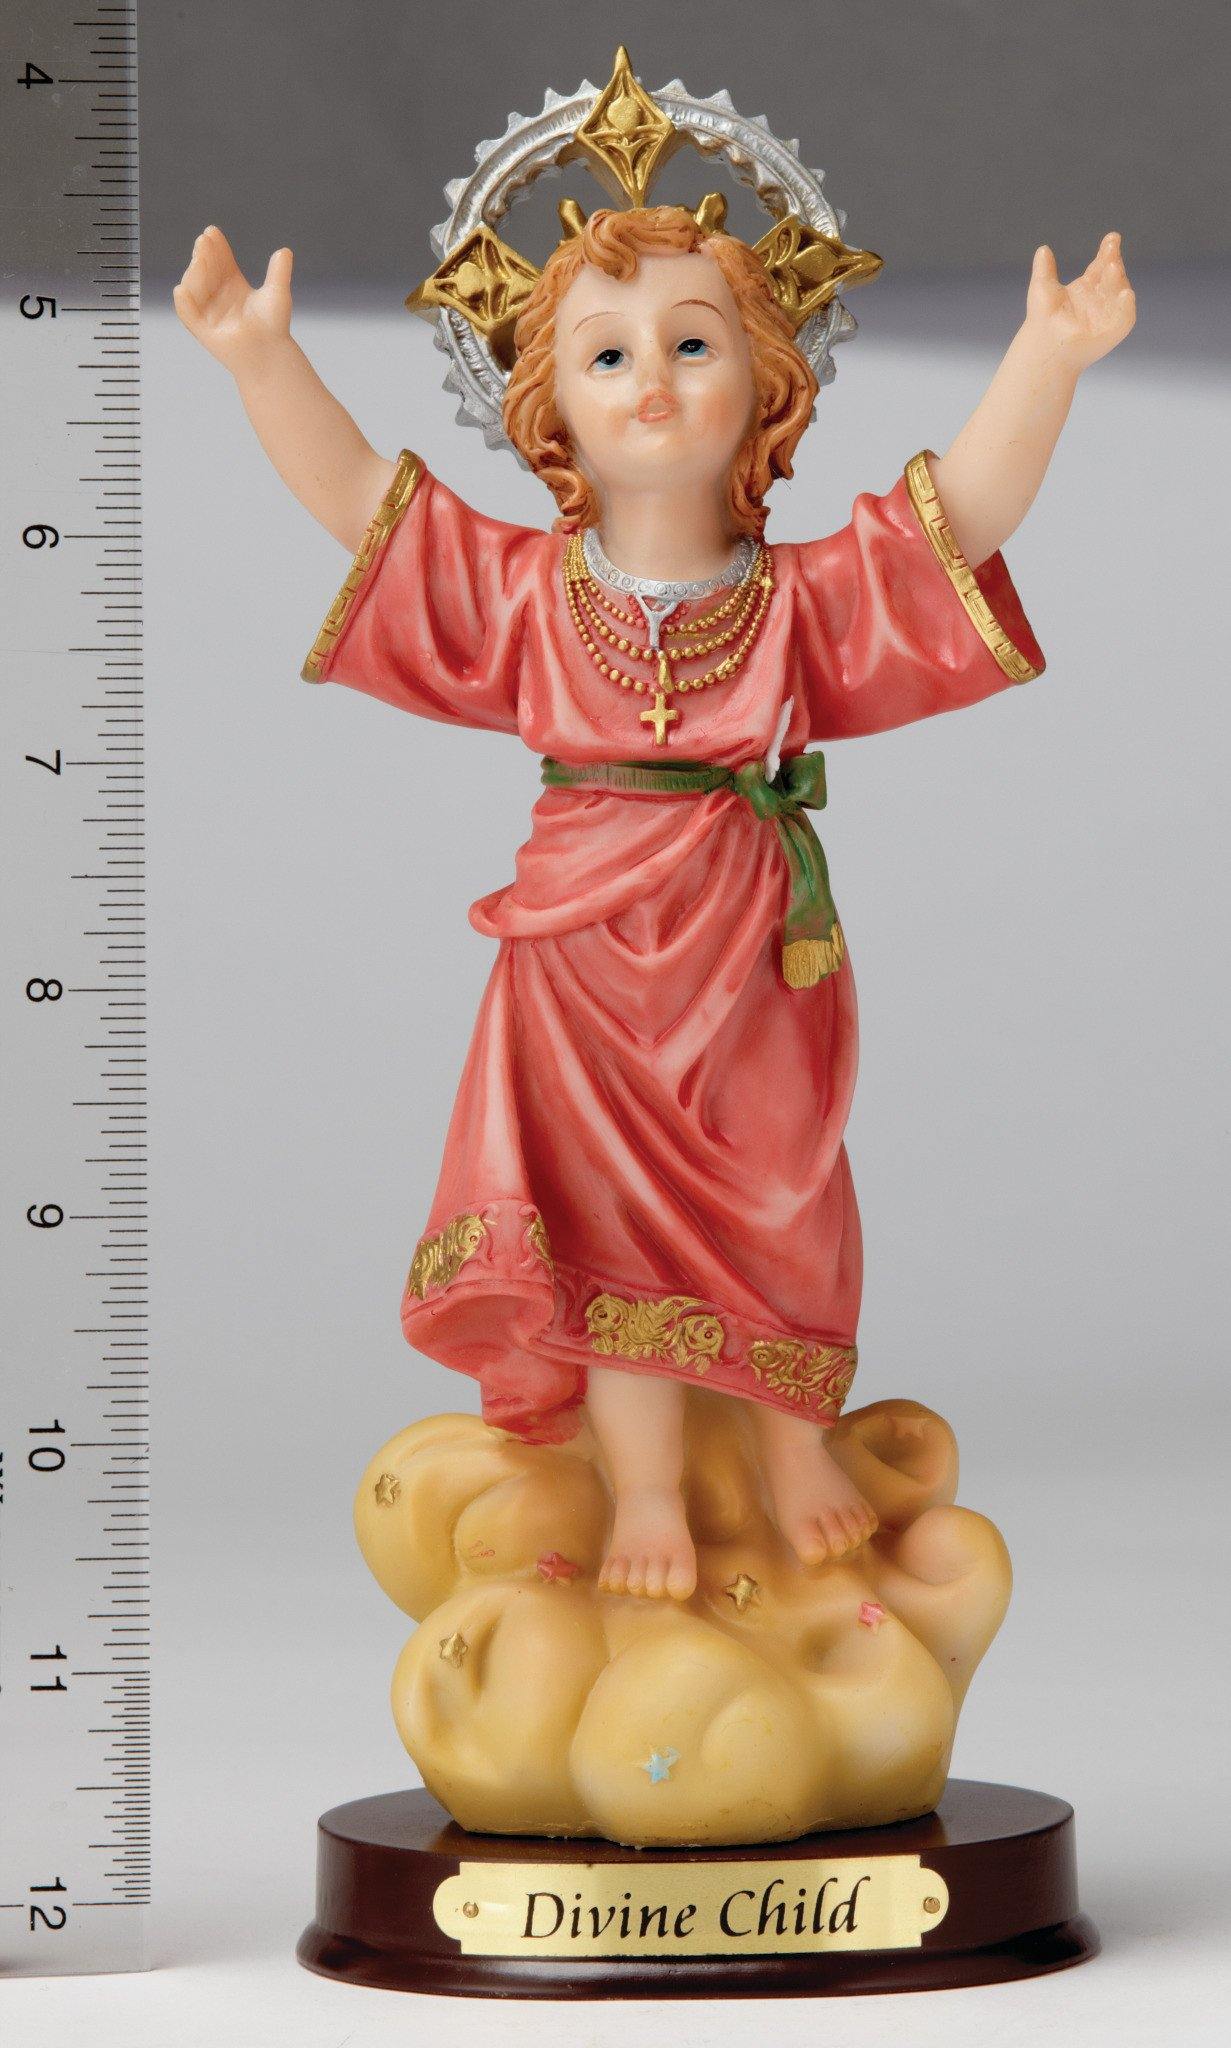 8" Divino Nino - Divine Child Statue - Hand Painted - Religious Art - Chiarelli's Religious Goods & Church Supply